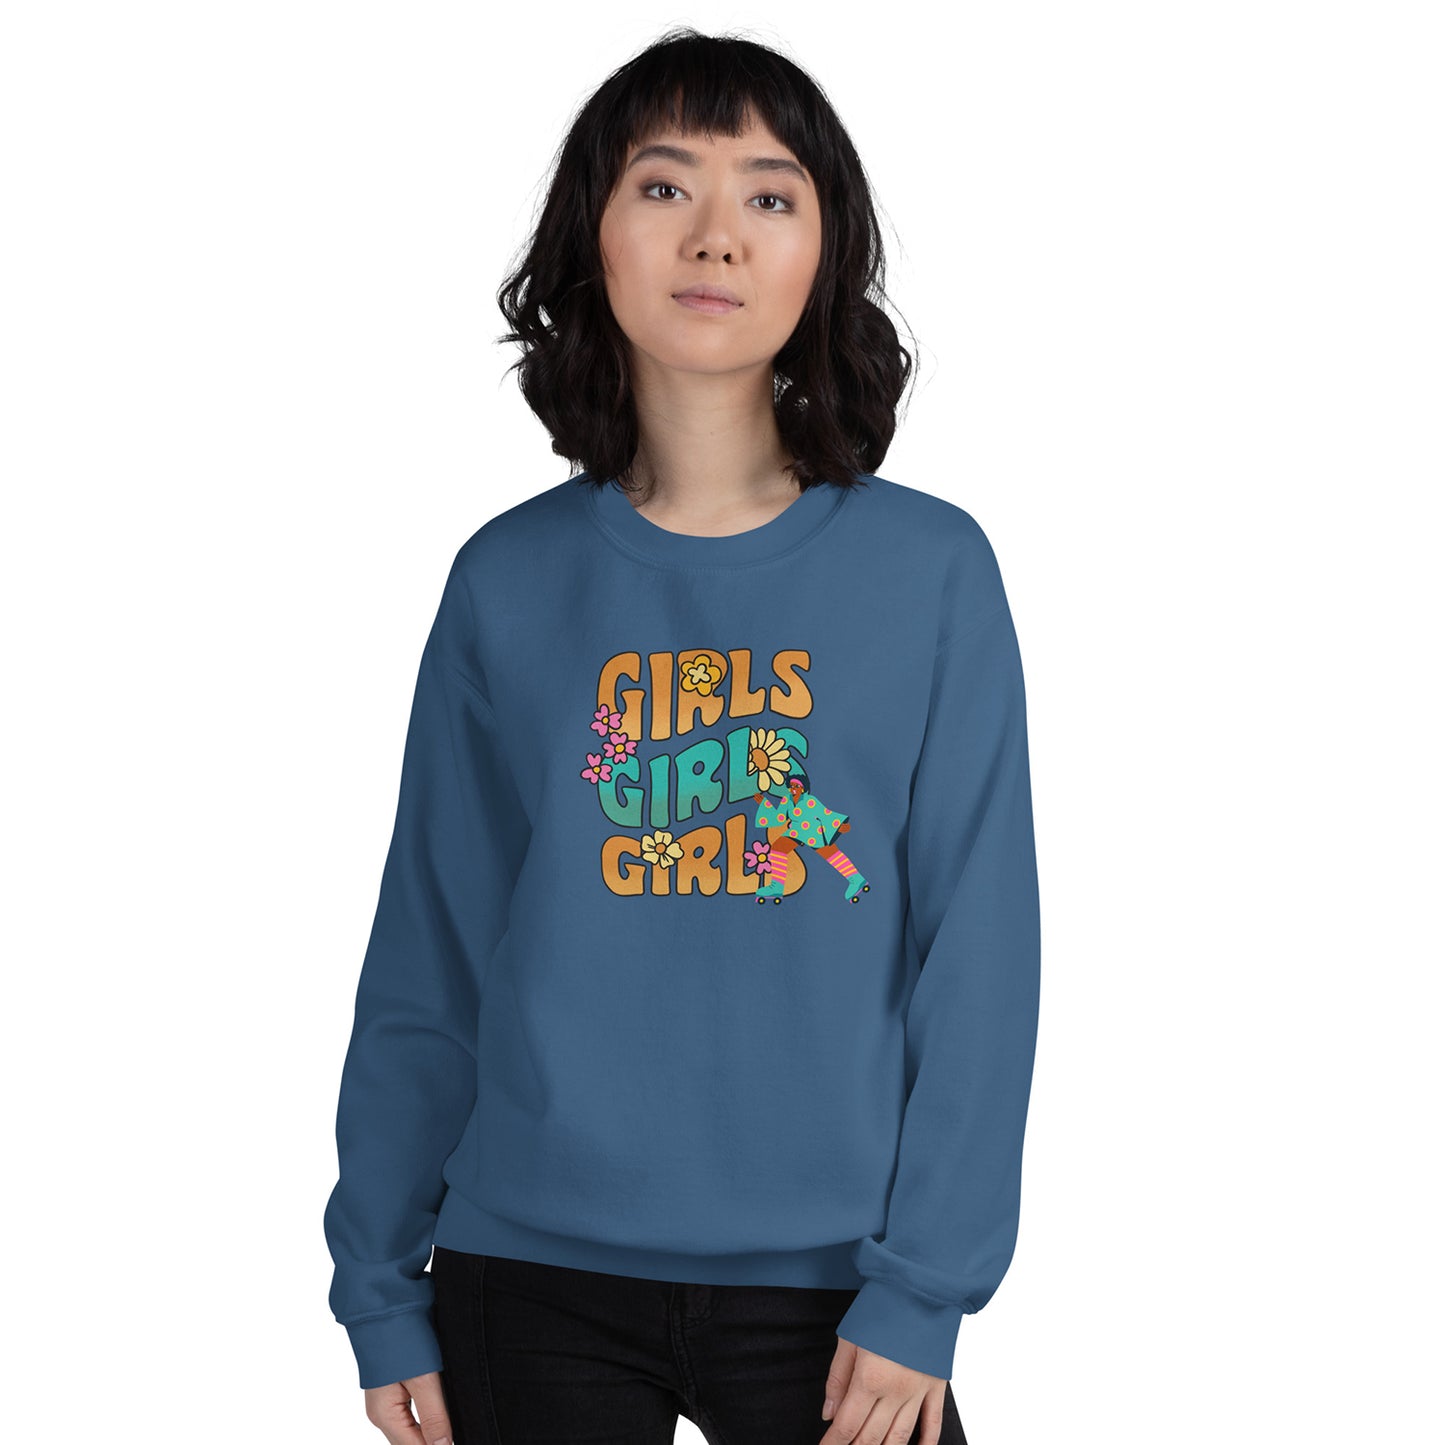 Go Girls Comfy Cotton Sweatshirt